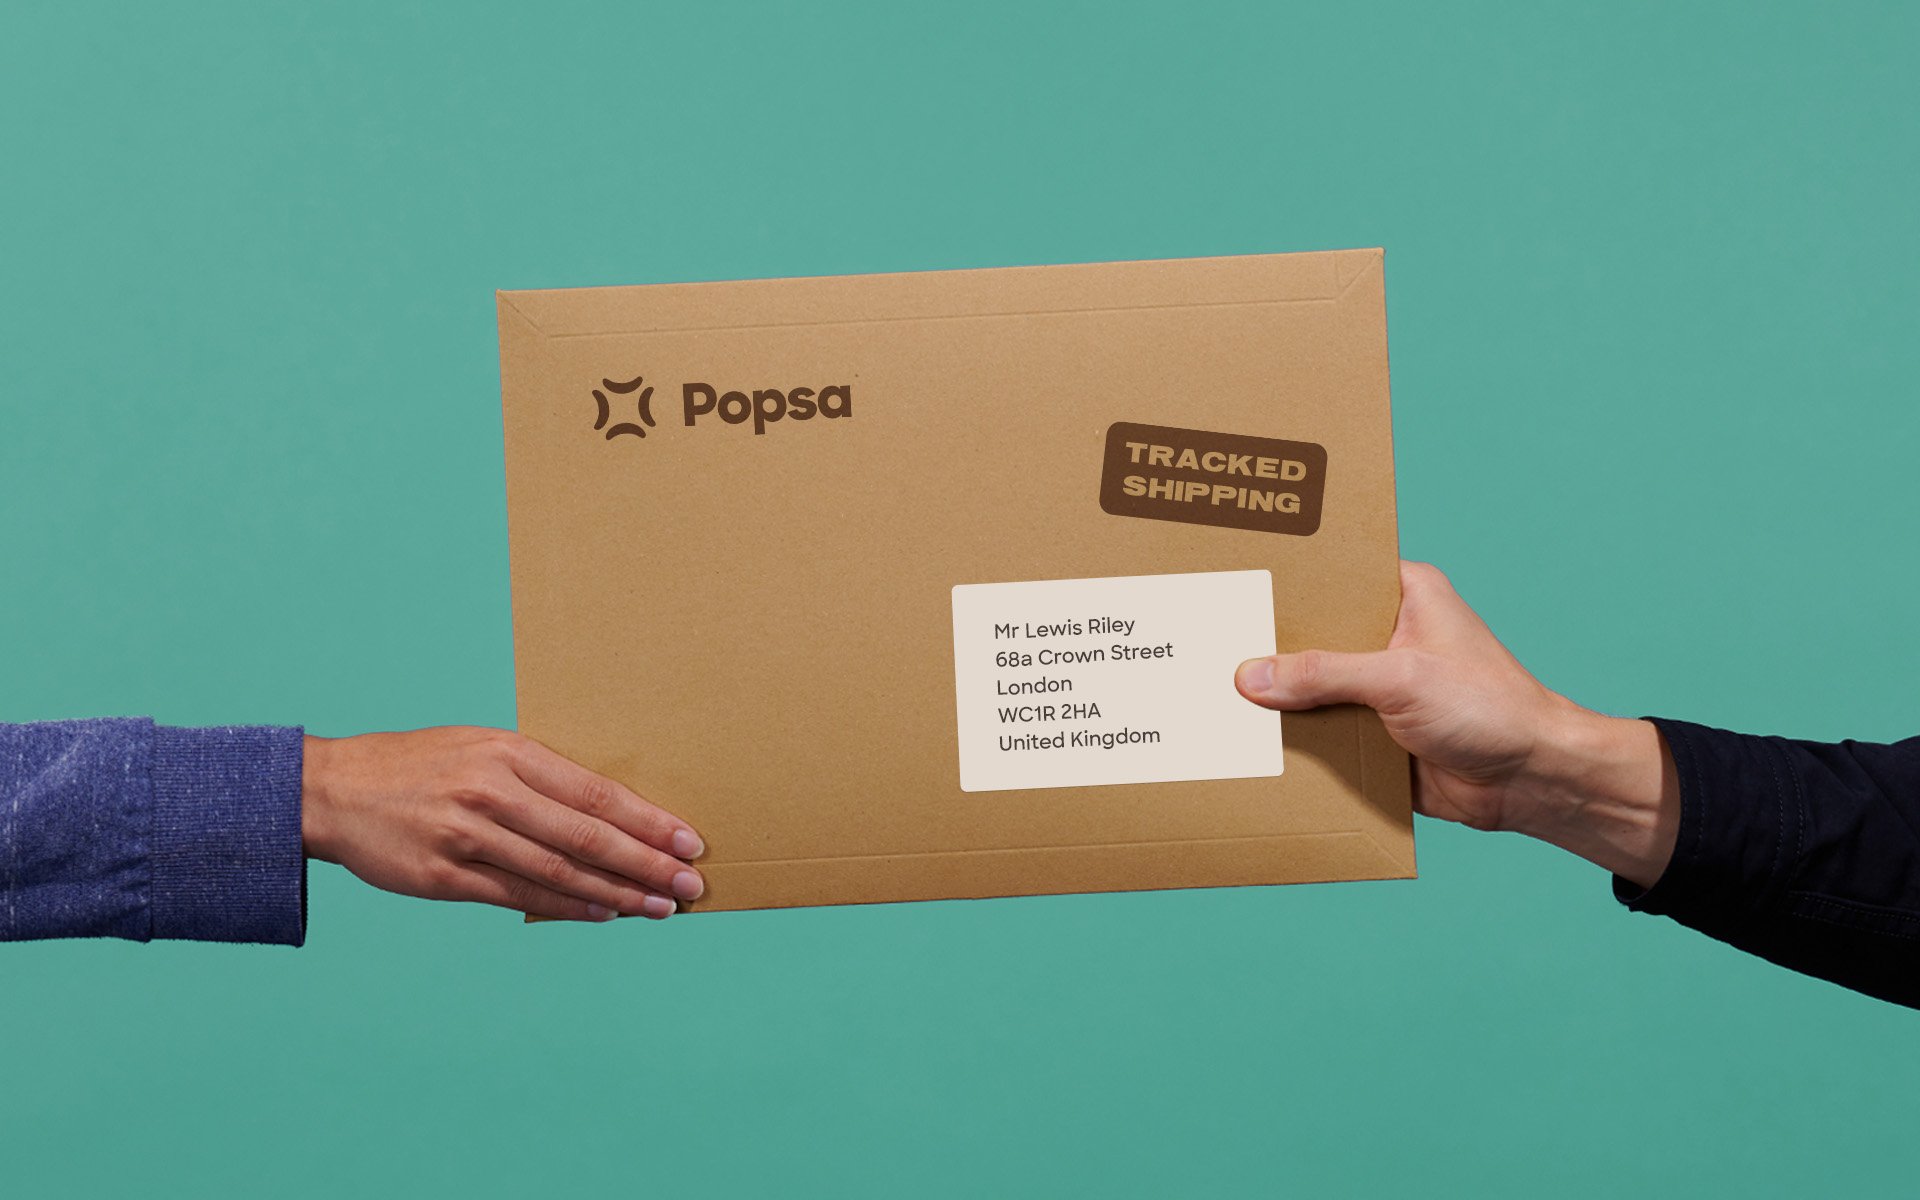 Popsa's delivery tracker